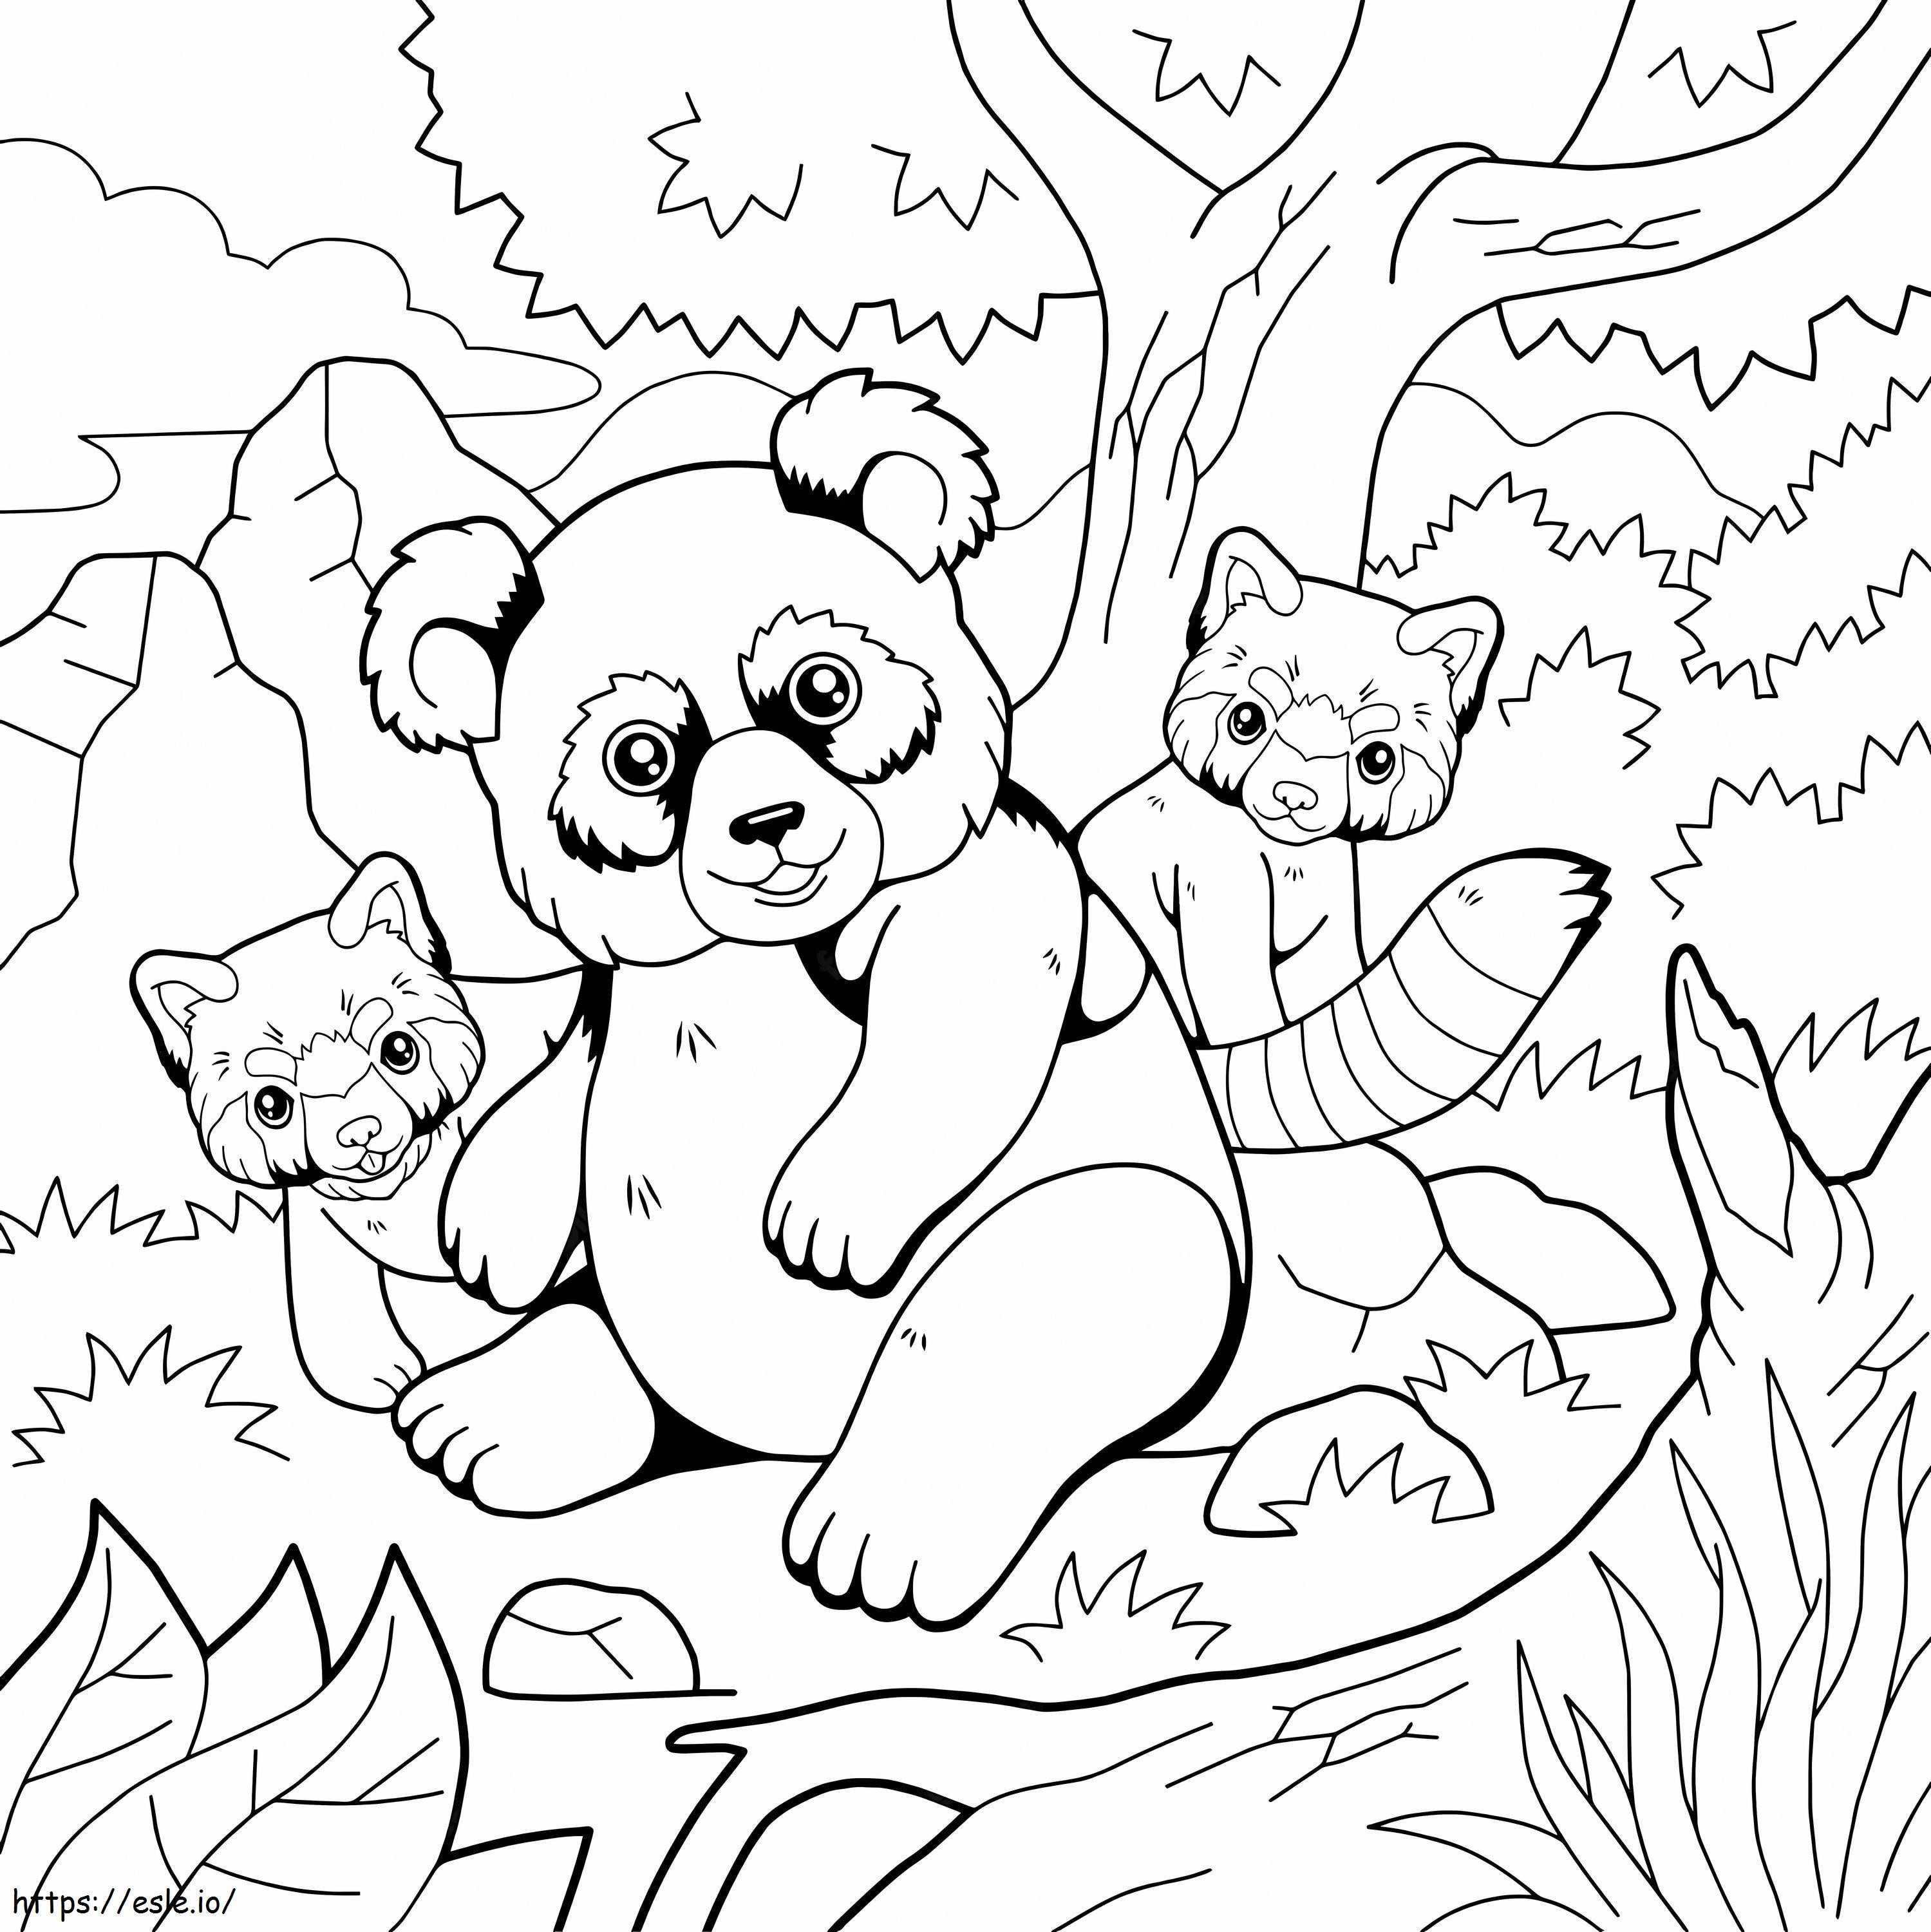 Anne Panda ve İki Yavru Panda boyama